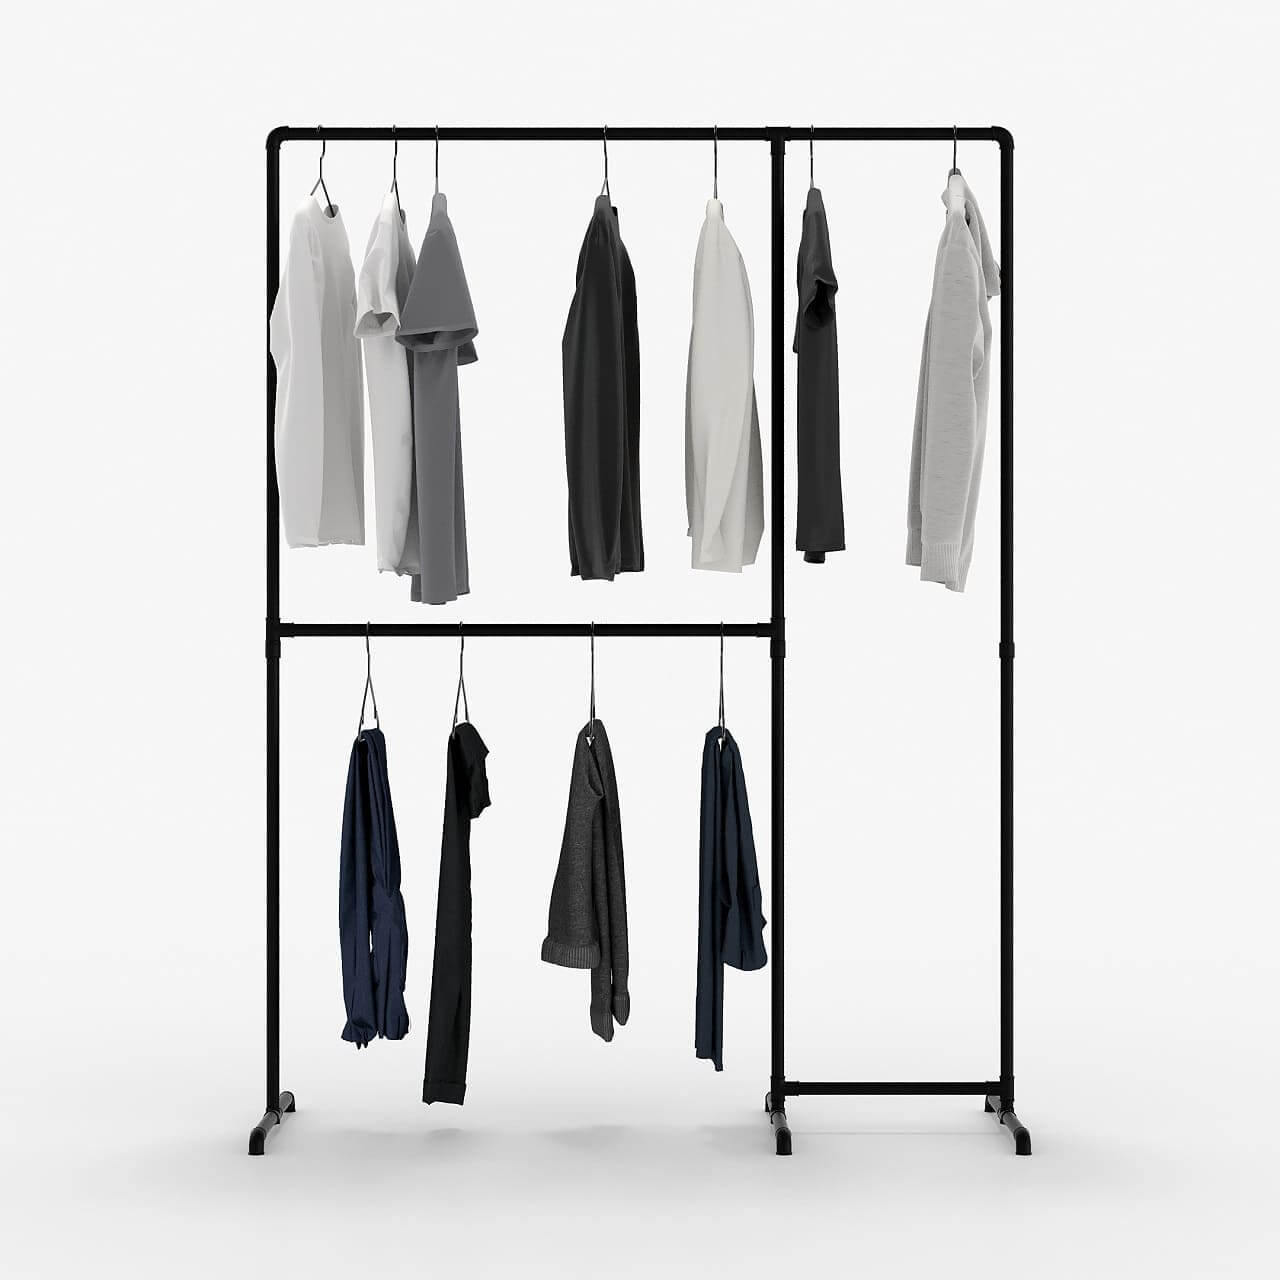 DIY Metal Closet Storage Organizer Garment Rack Heavy Duty Clothes